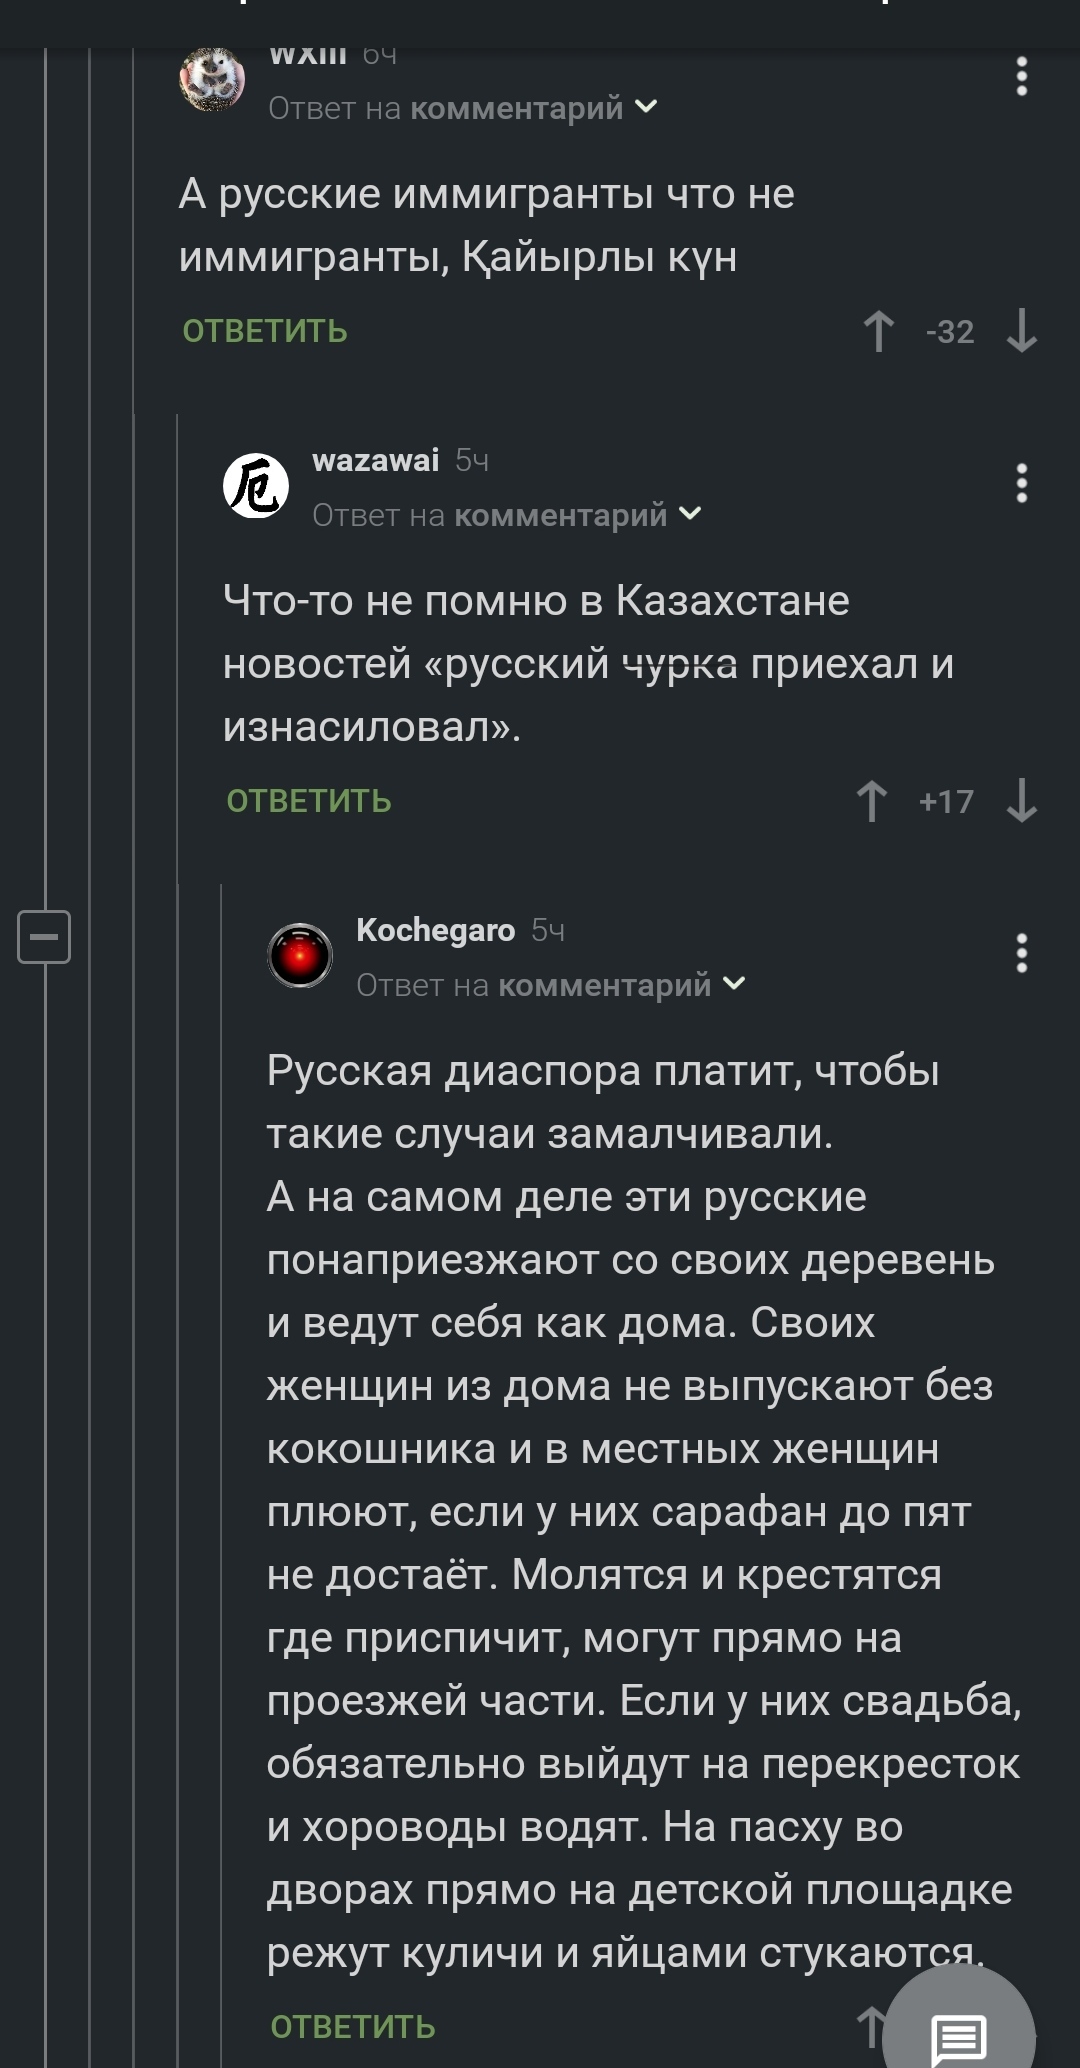 Russian diaspora - Comments on Peekaboo, Screenshot, Diaspora, Migrants